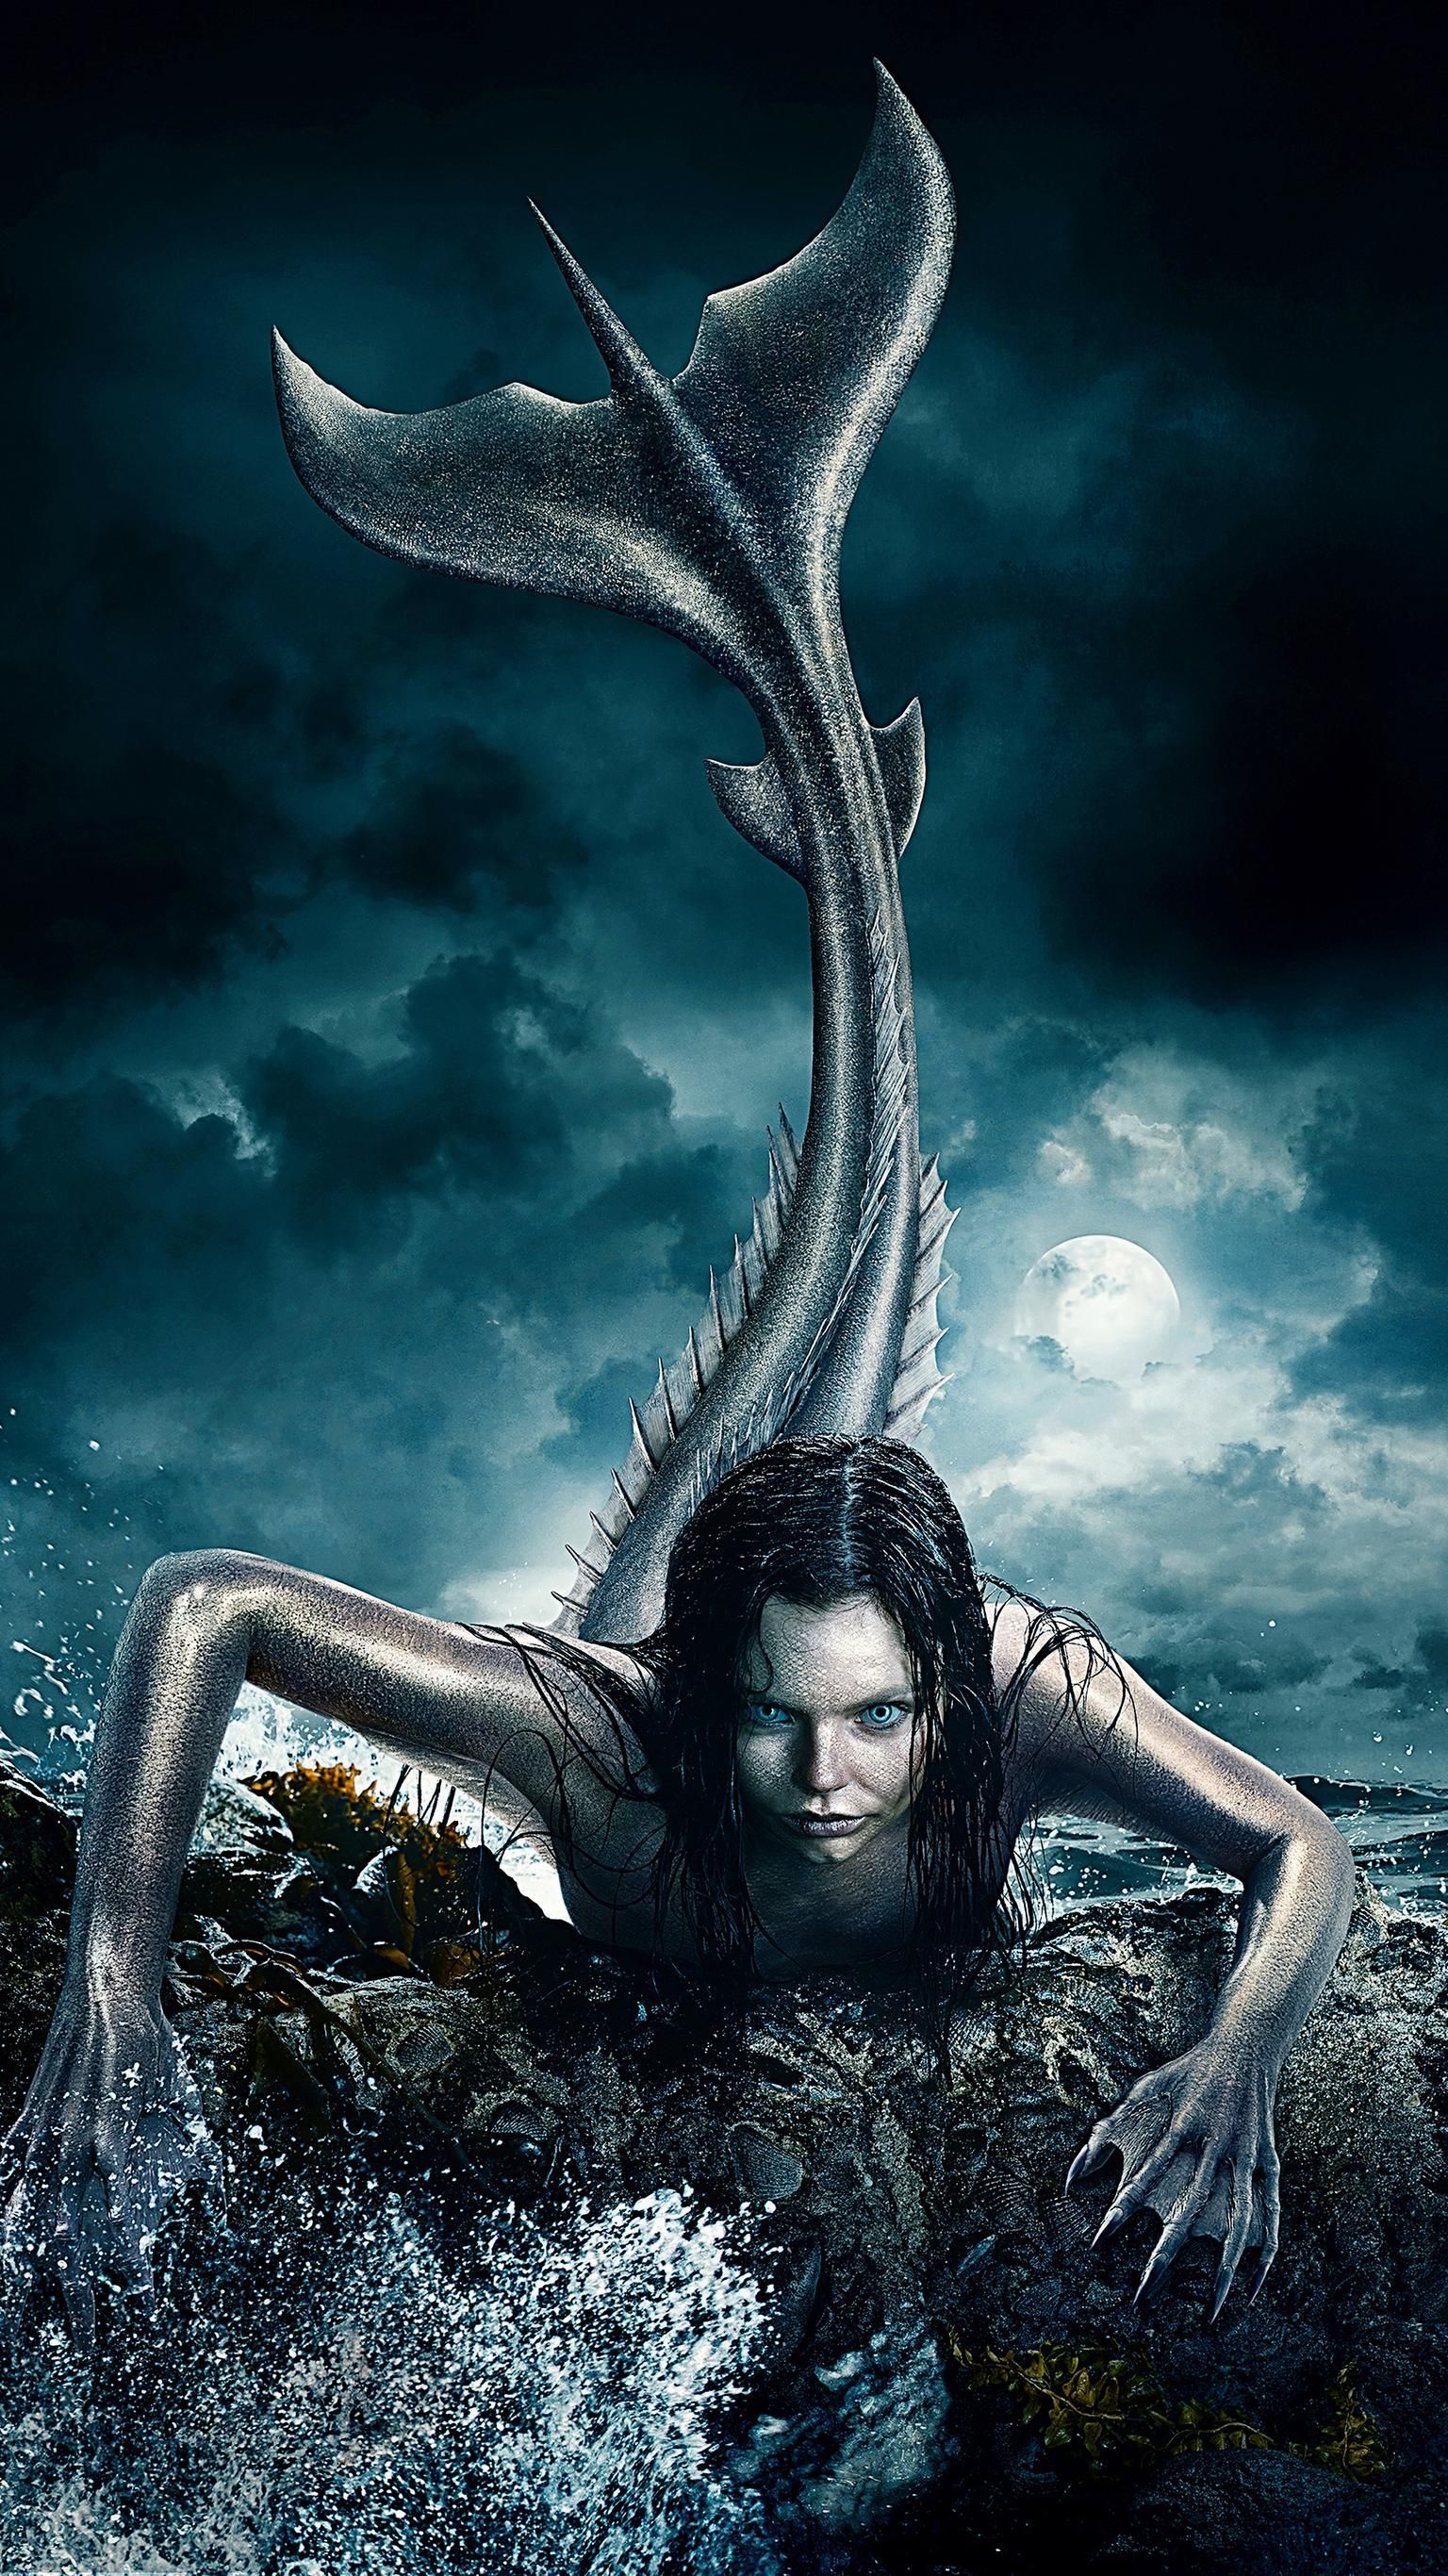 Siren Phone Wallpaper. Moviemania. Criaturas mitológicas gregas, Fotos de sereia, Sereias lindas